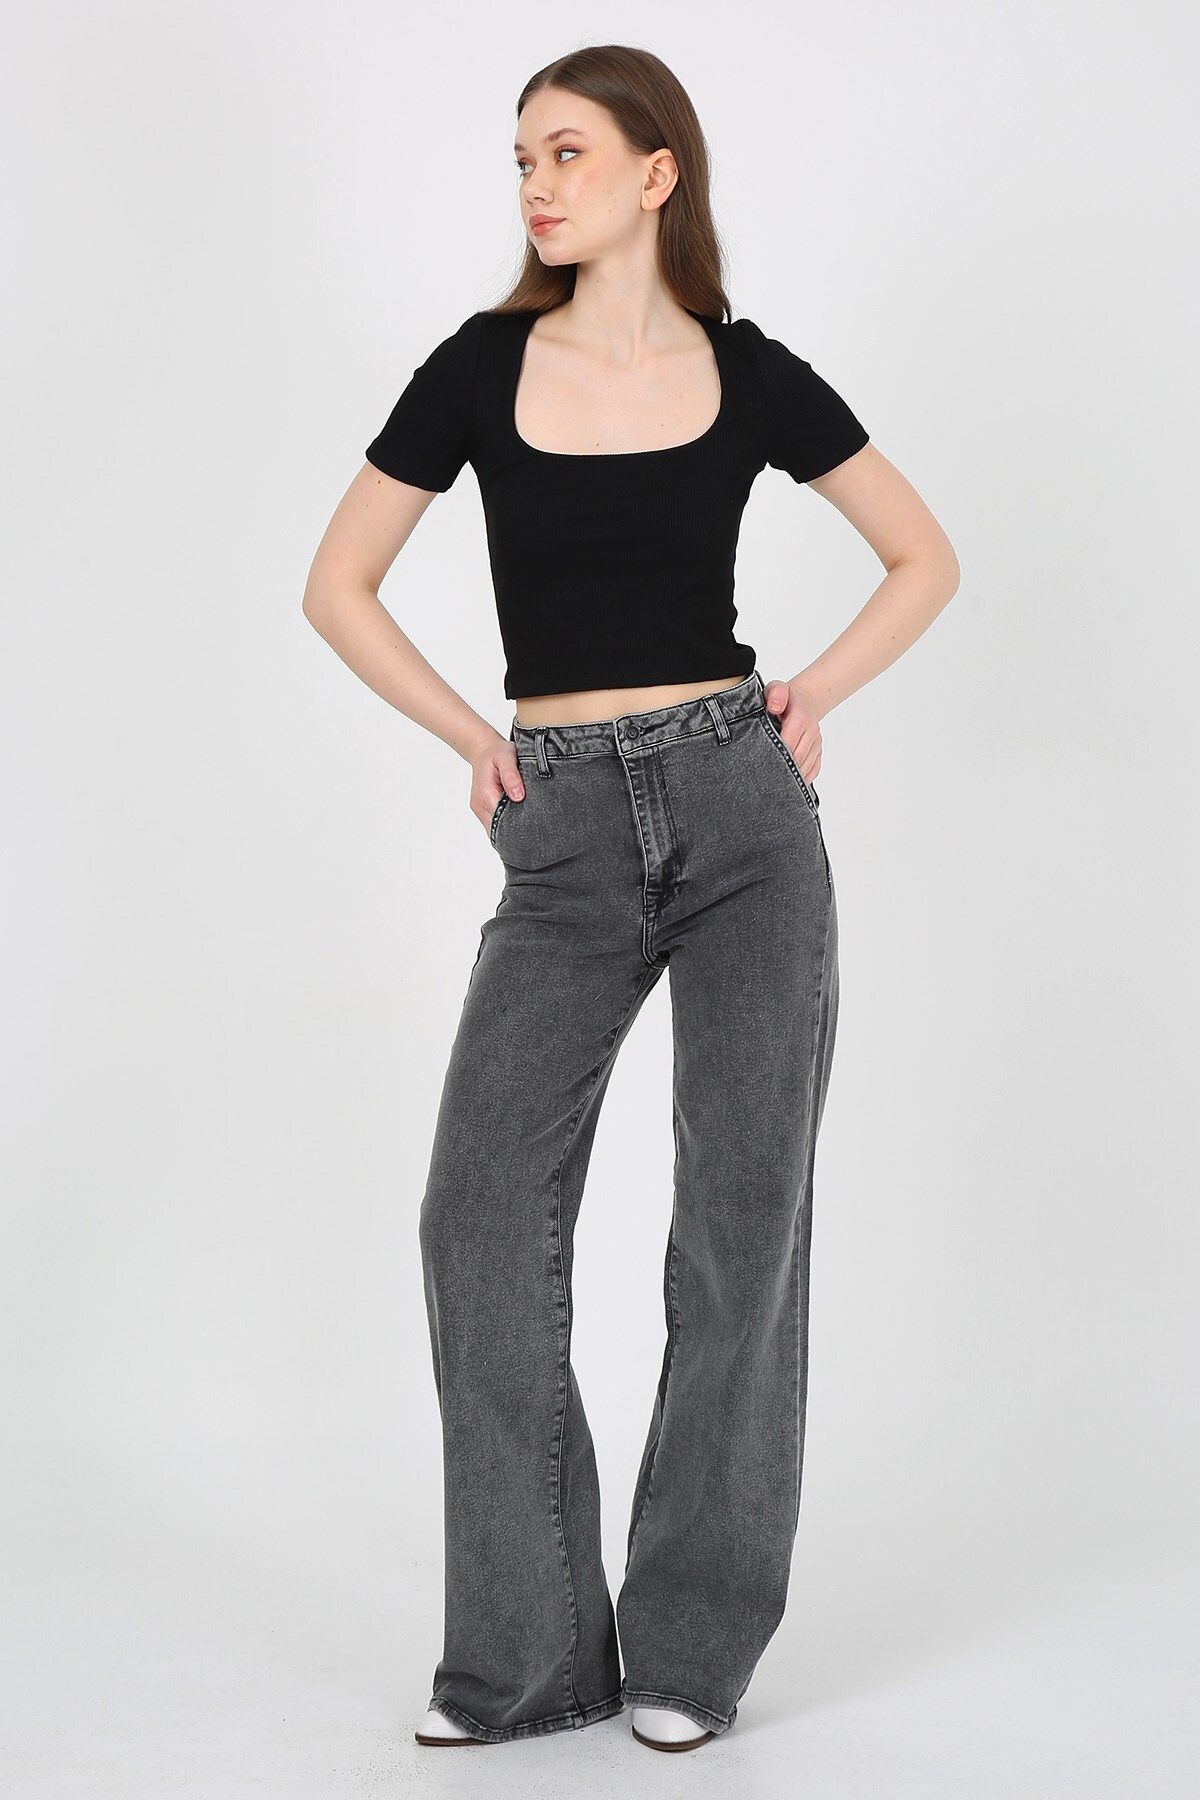 Twister Jeans Kadın Pantolon Asia 9413-02 Grey